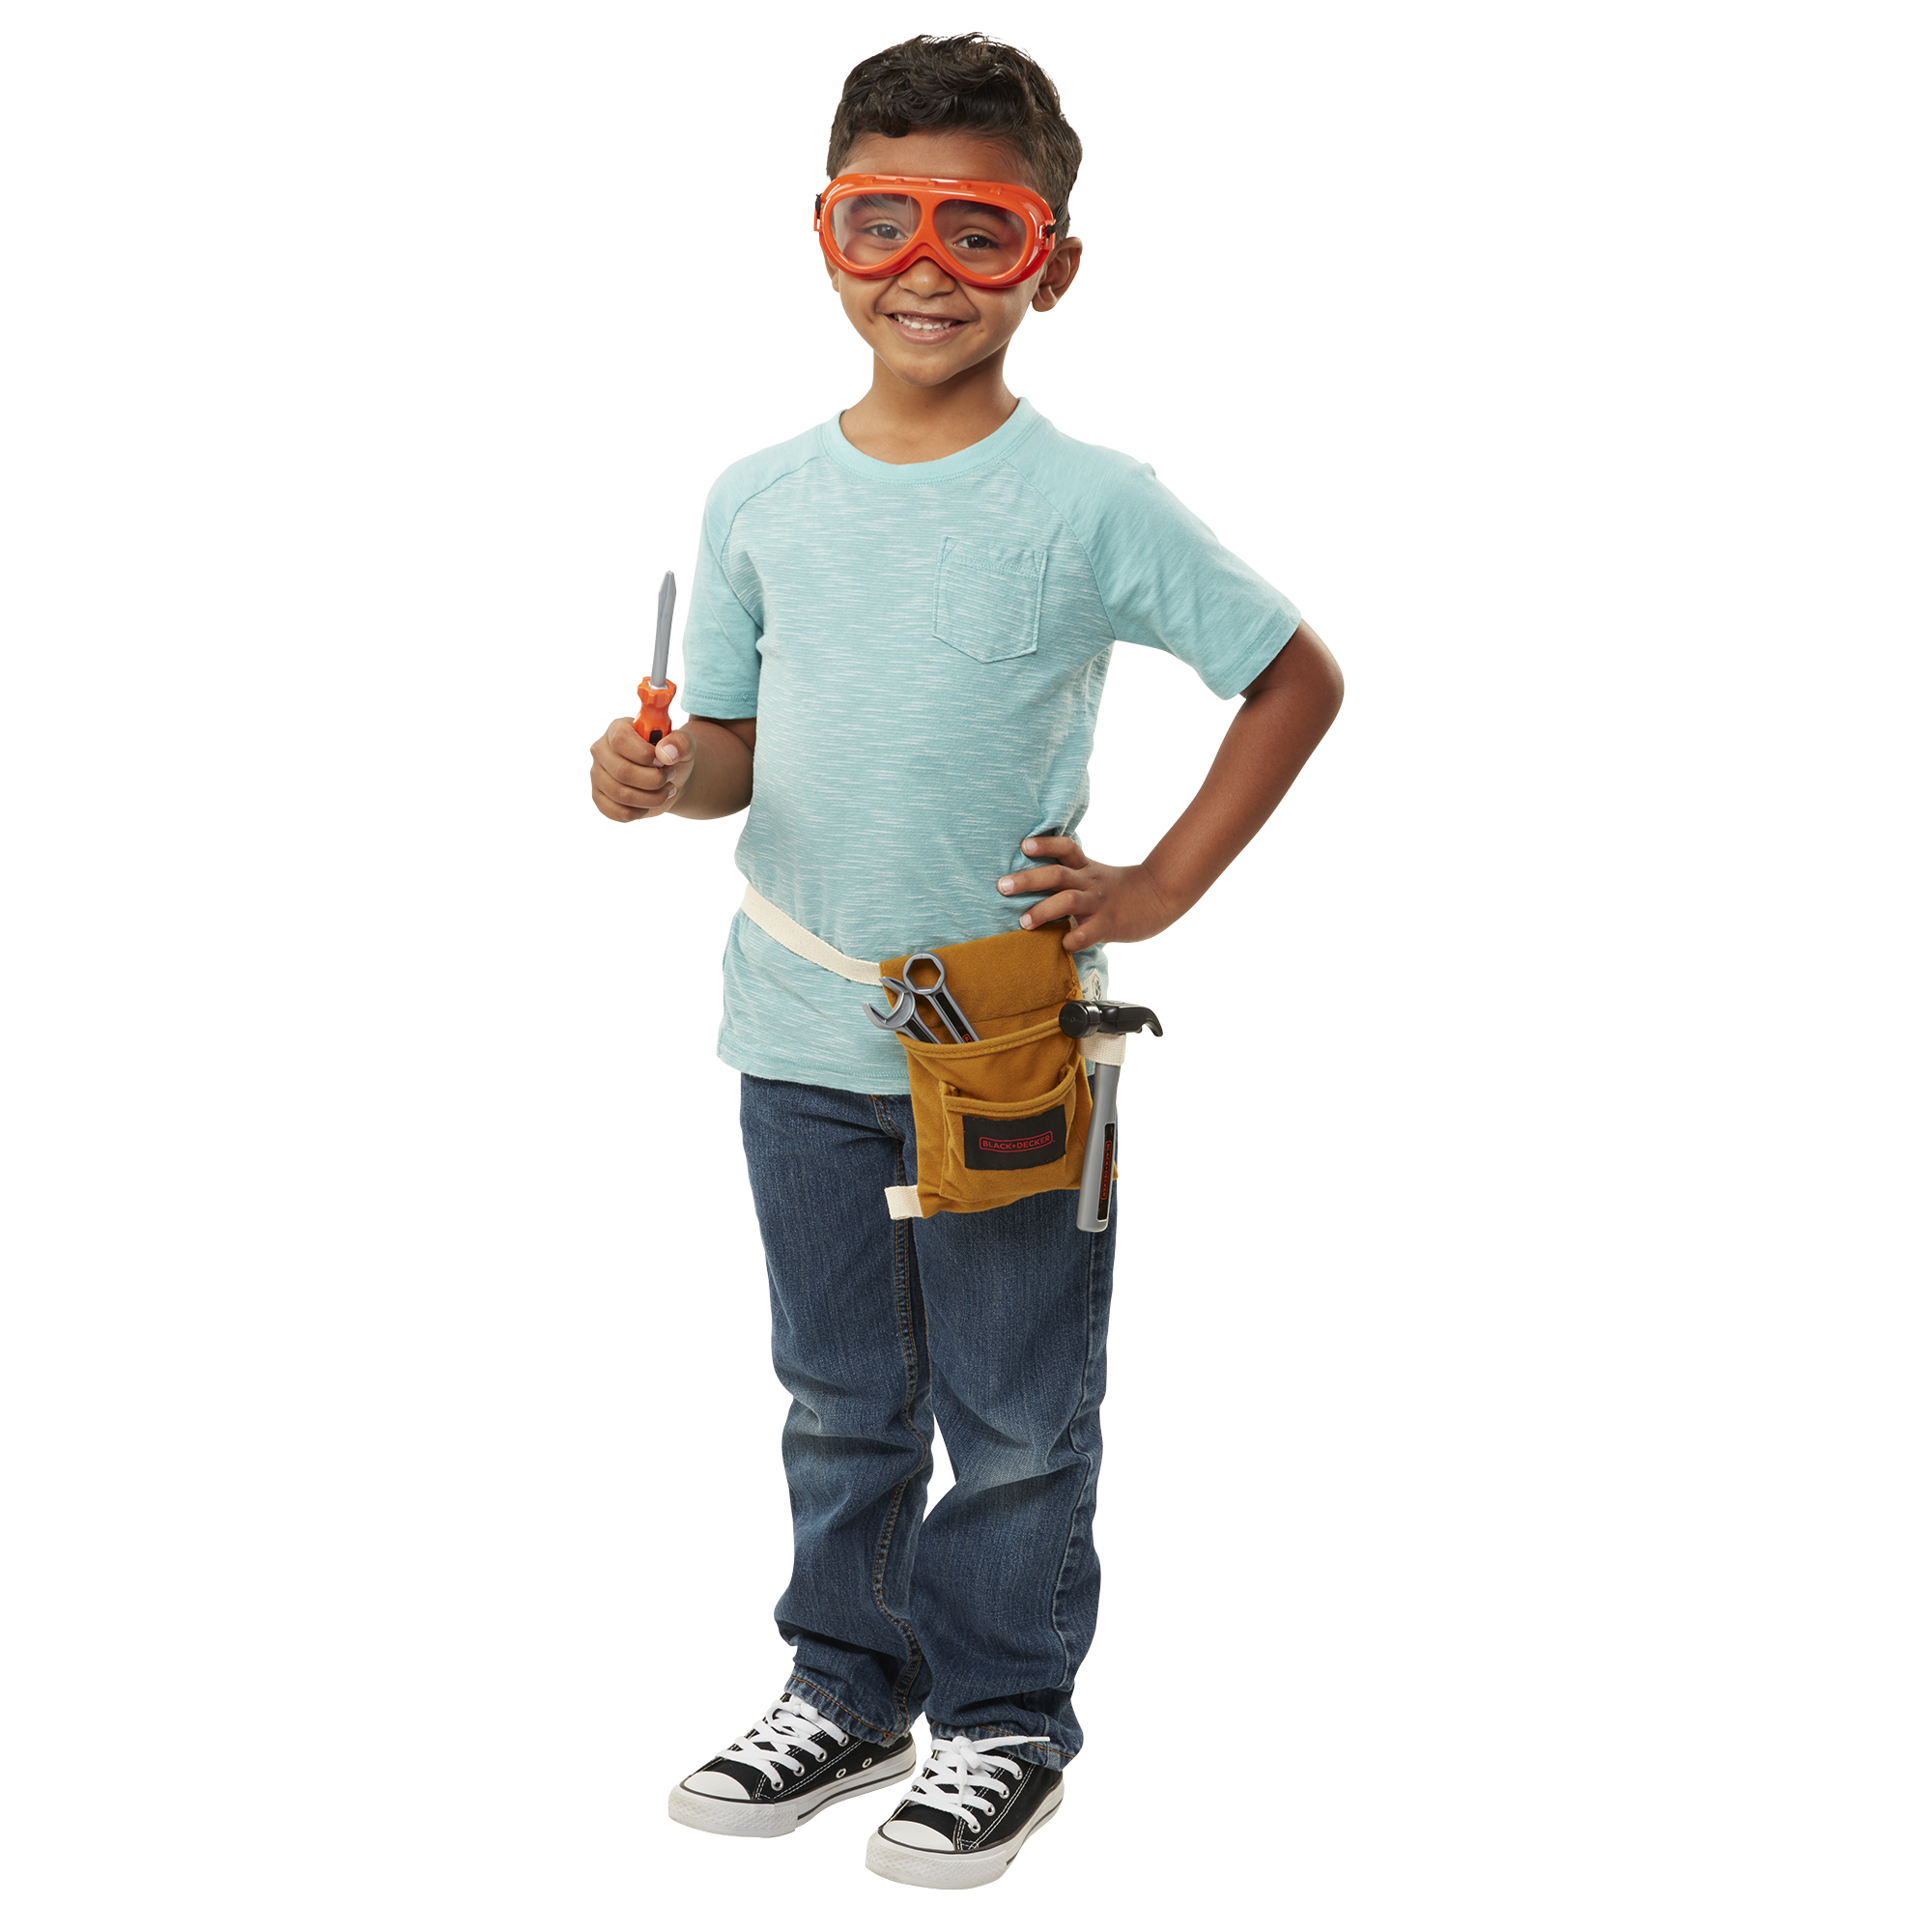 Junior Chainsaw Power Tool - JAKKS Pacific, Inc.